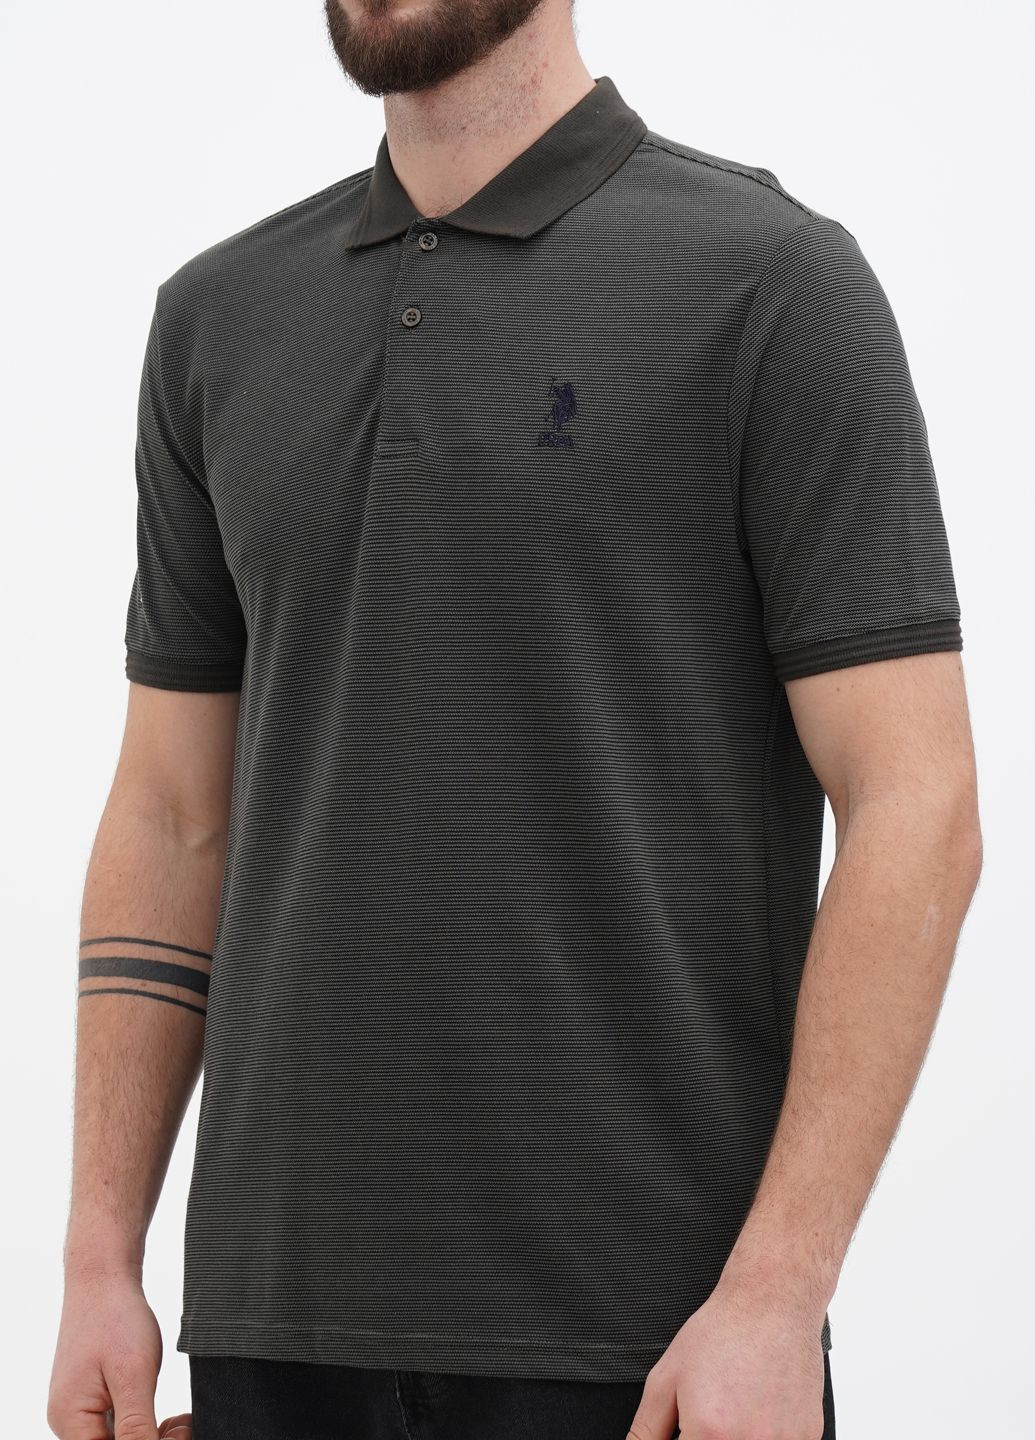 Хаки (оливковая) футболка поло мужское U.S. Polo Assn.